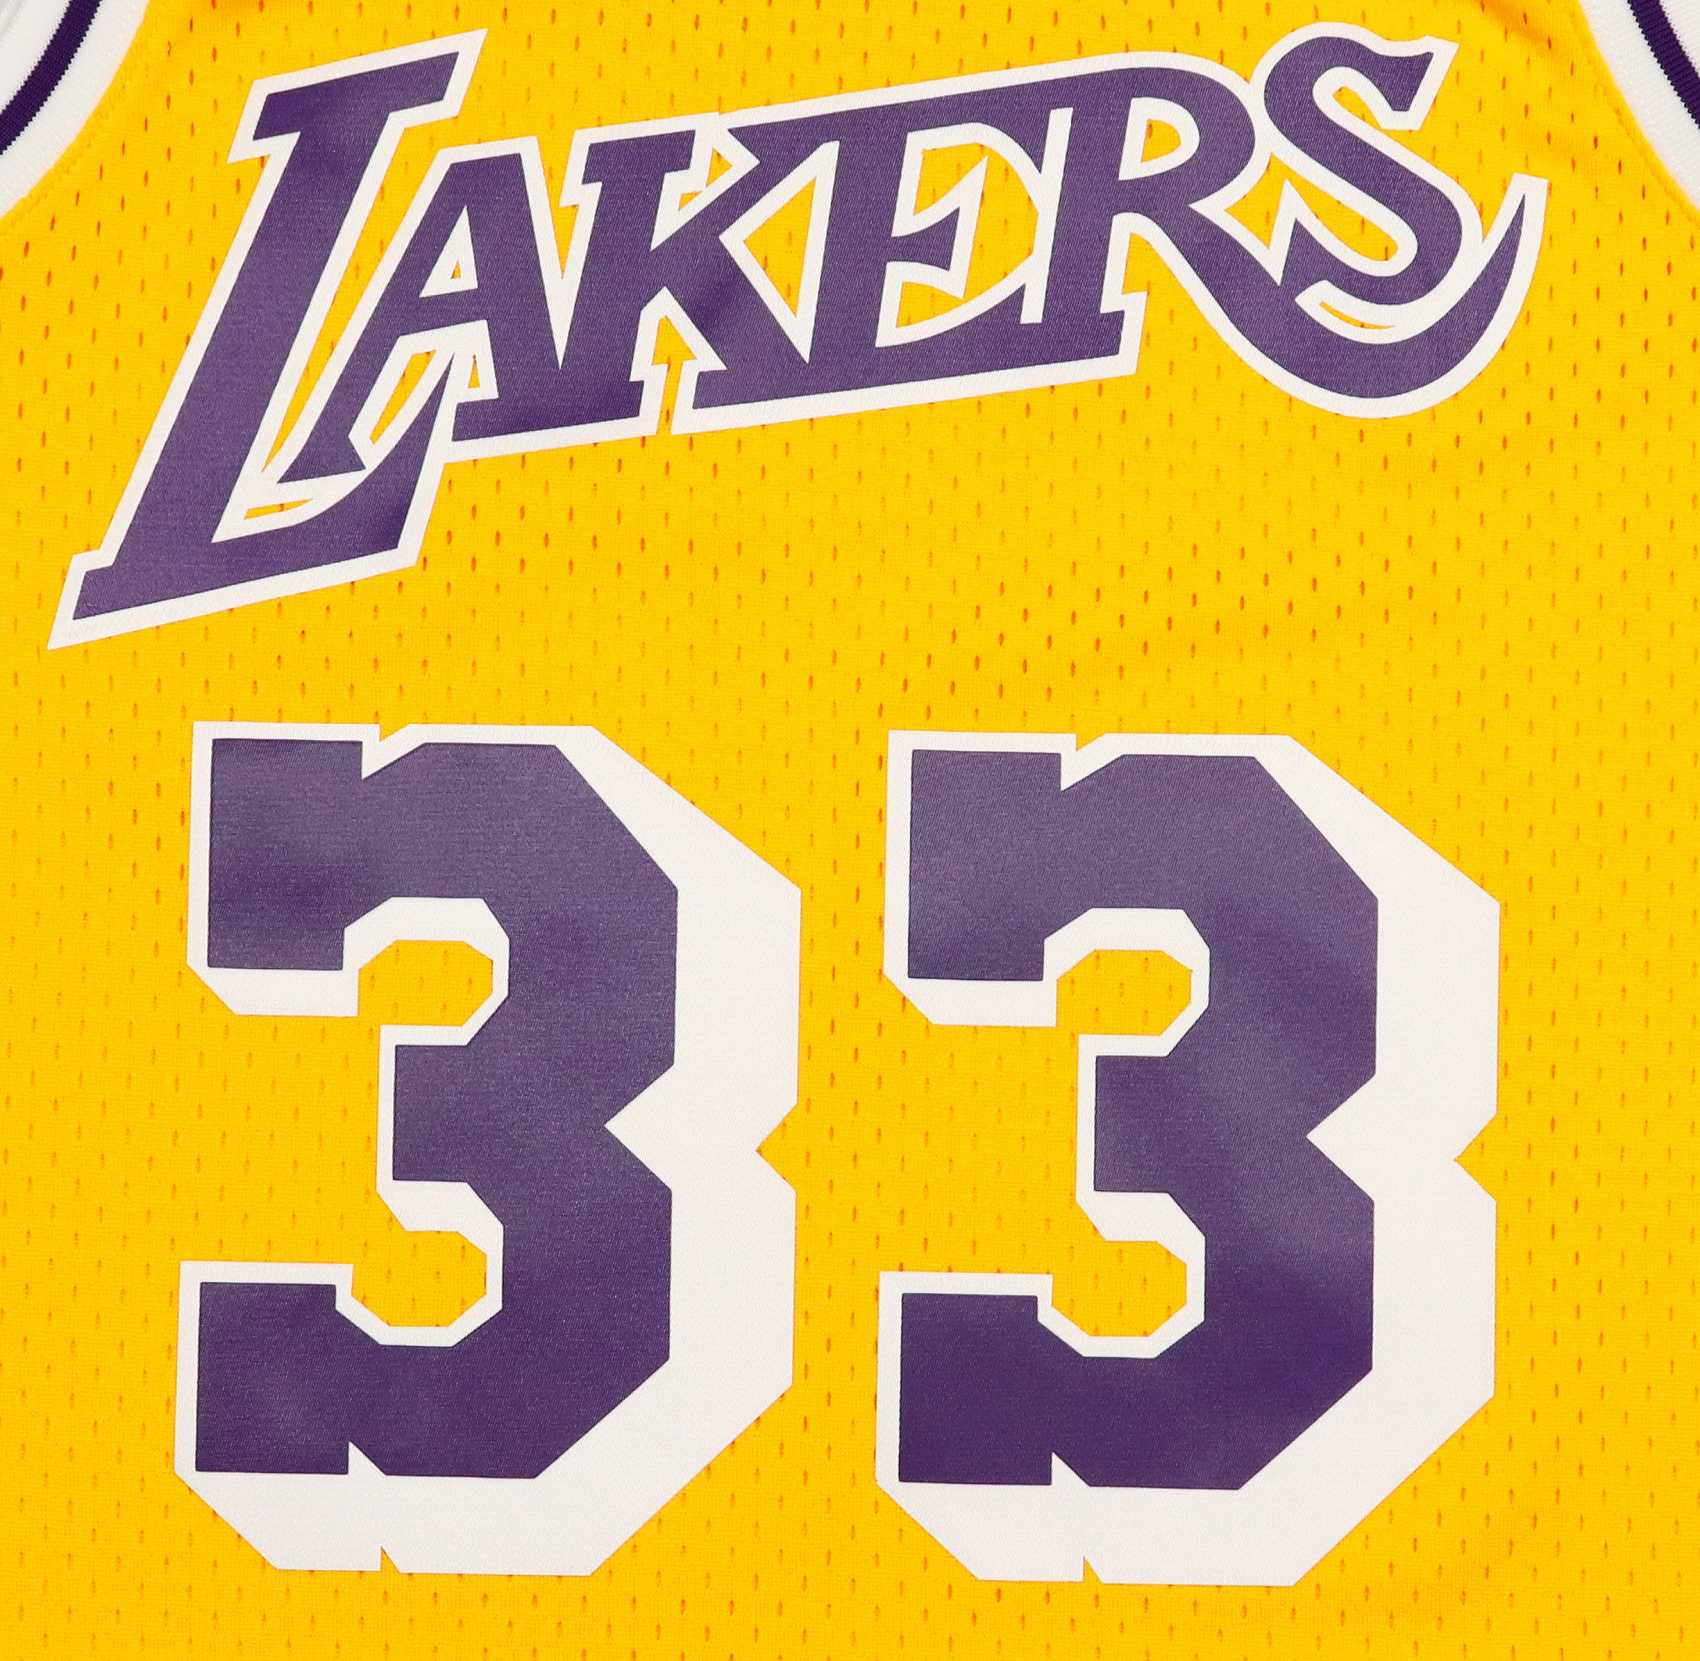 Kareem Abdul-Jabbar #33 Los Angeles Lakers NBA Swingman Mitchell & Ness